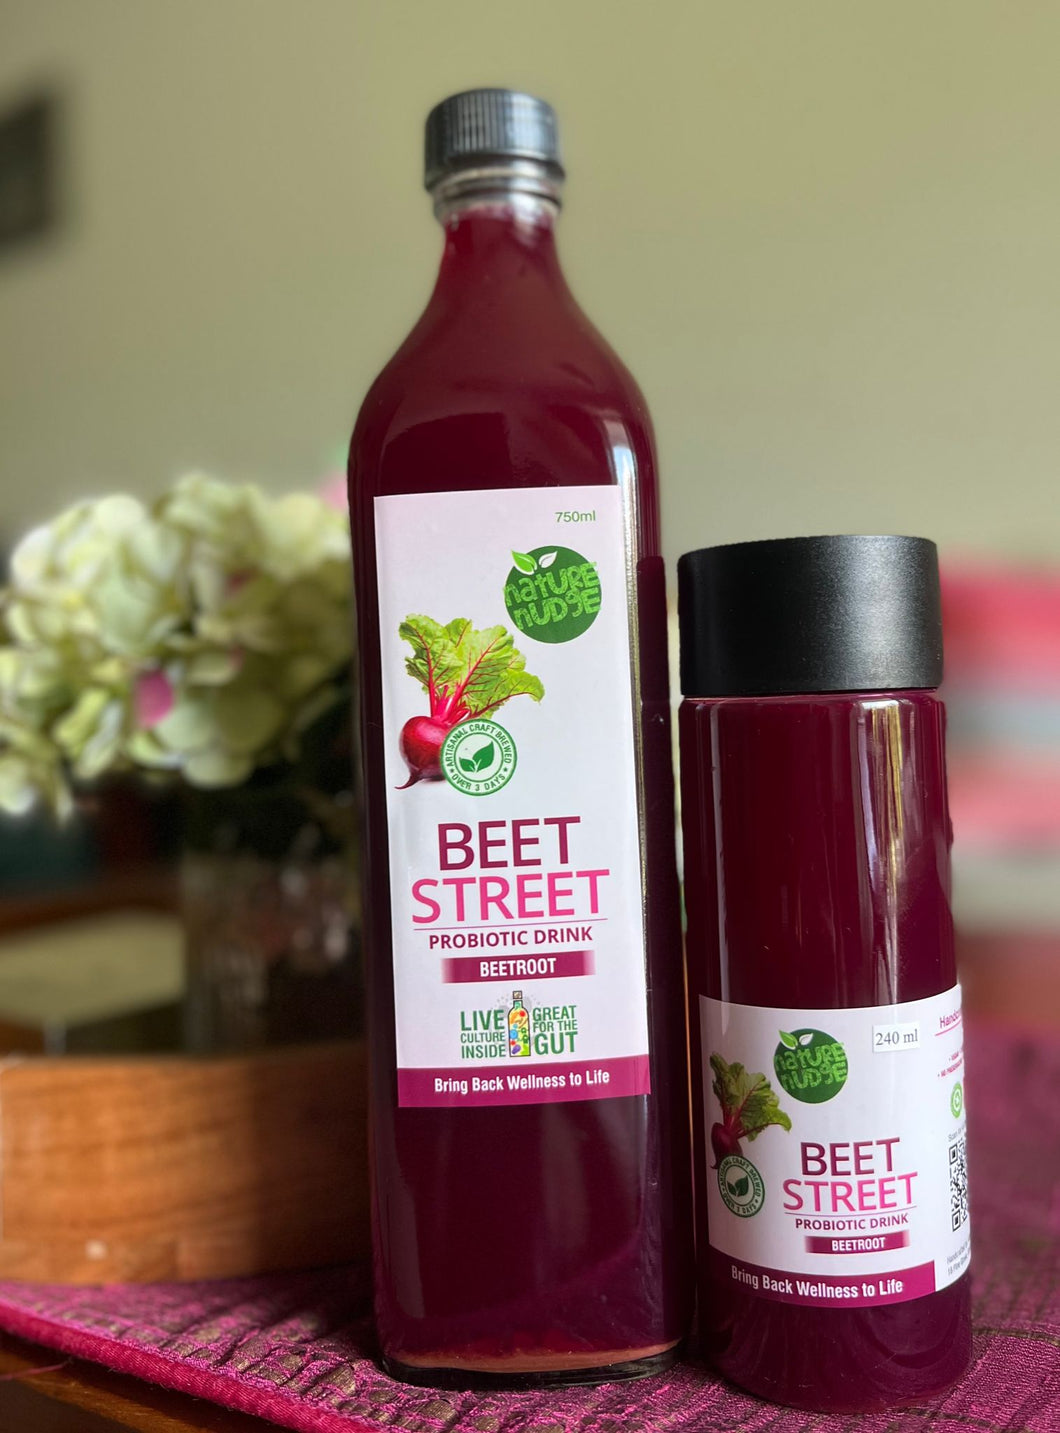 Beetstreet- Beetroot based drink